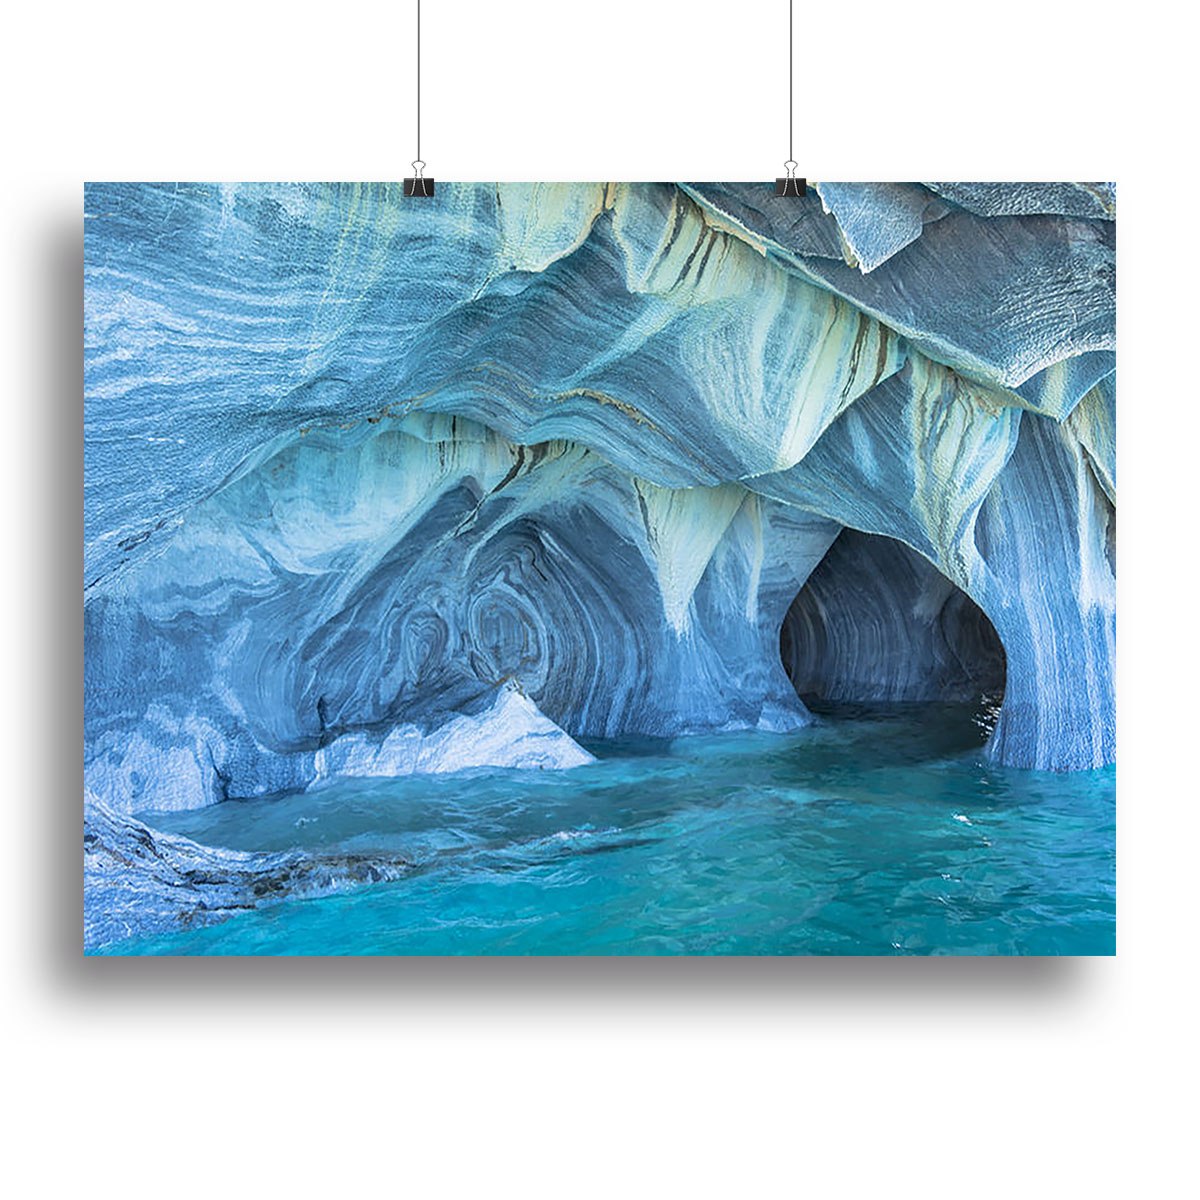 Aqua Marble Landscape Canvas Print or Poster - Canvas Art Rocks - 2